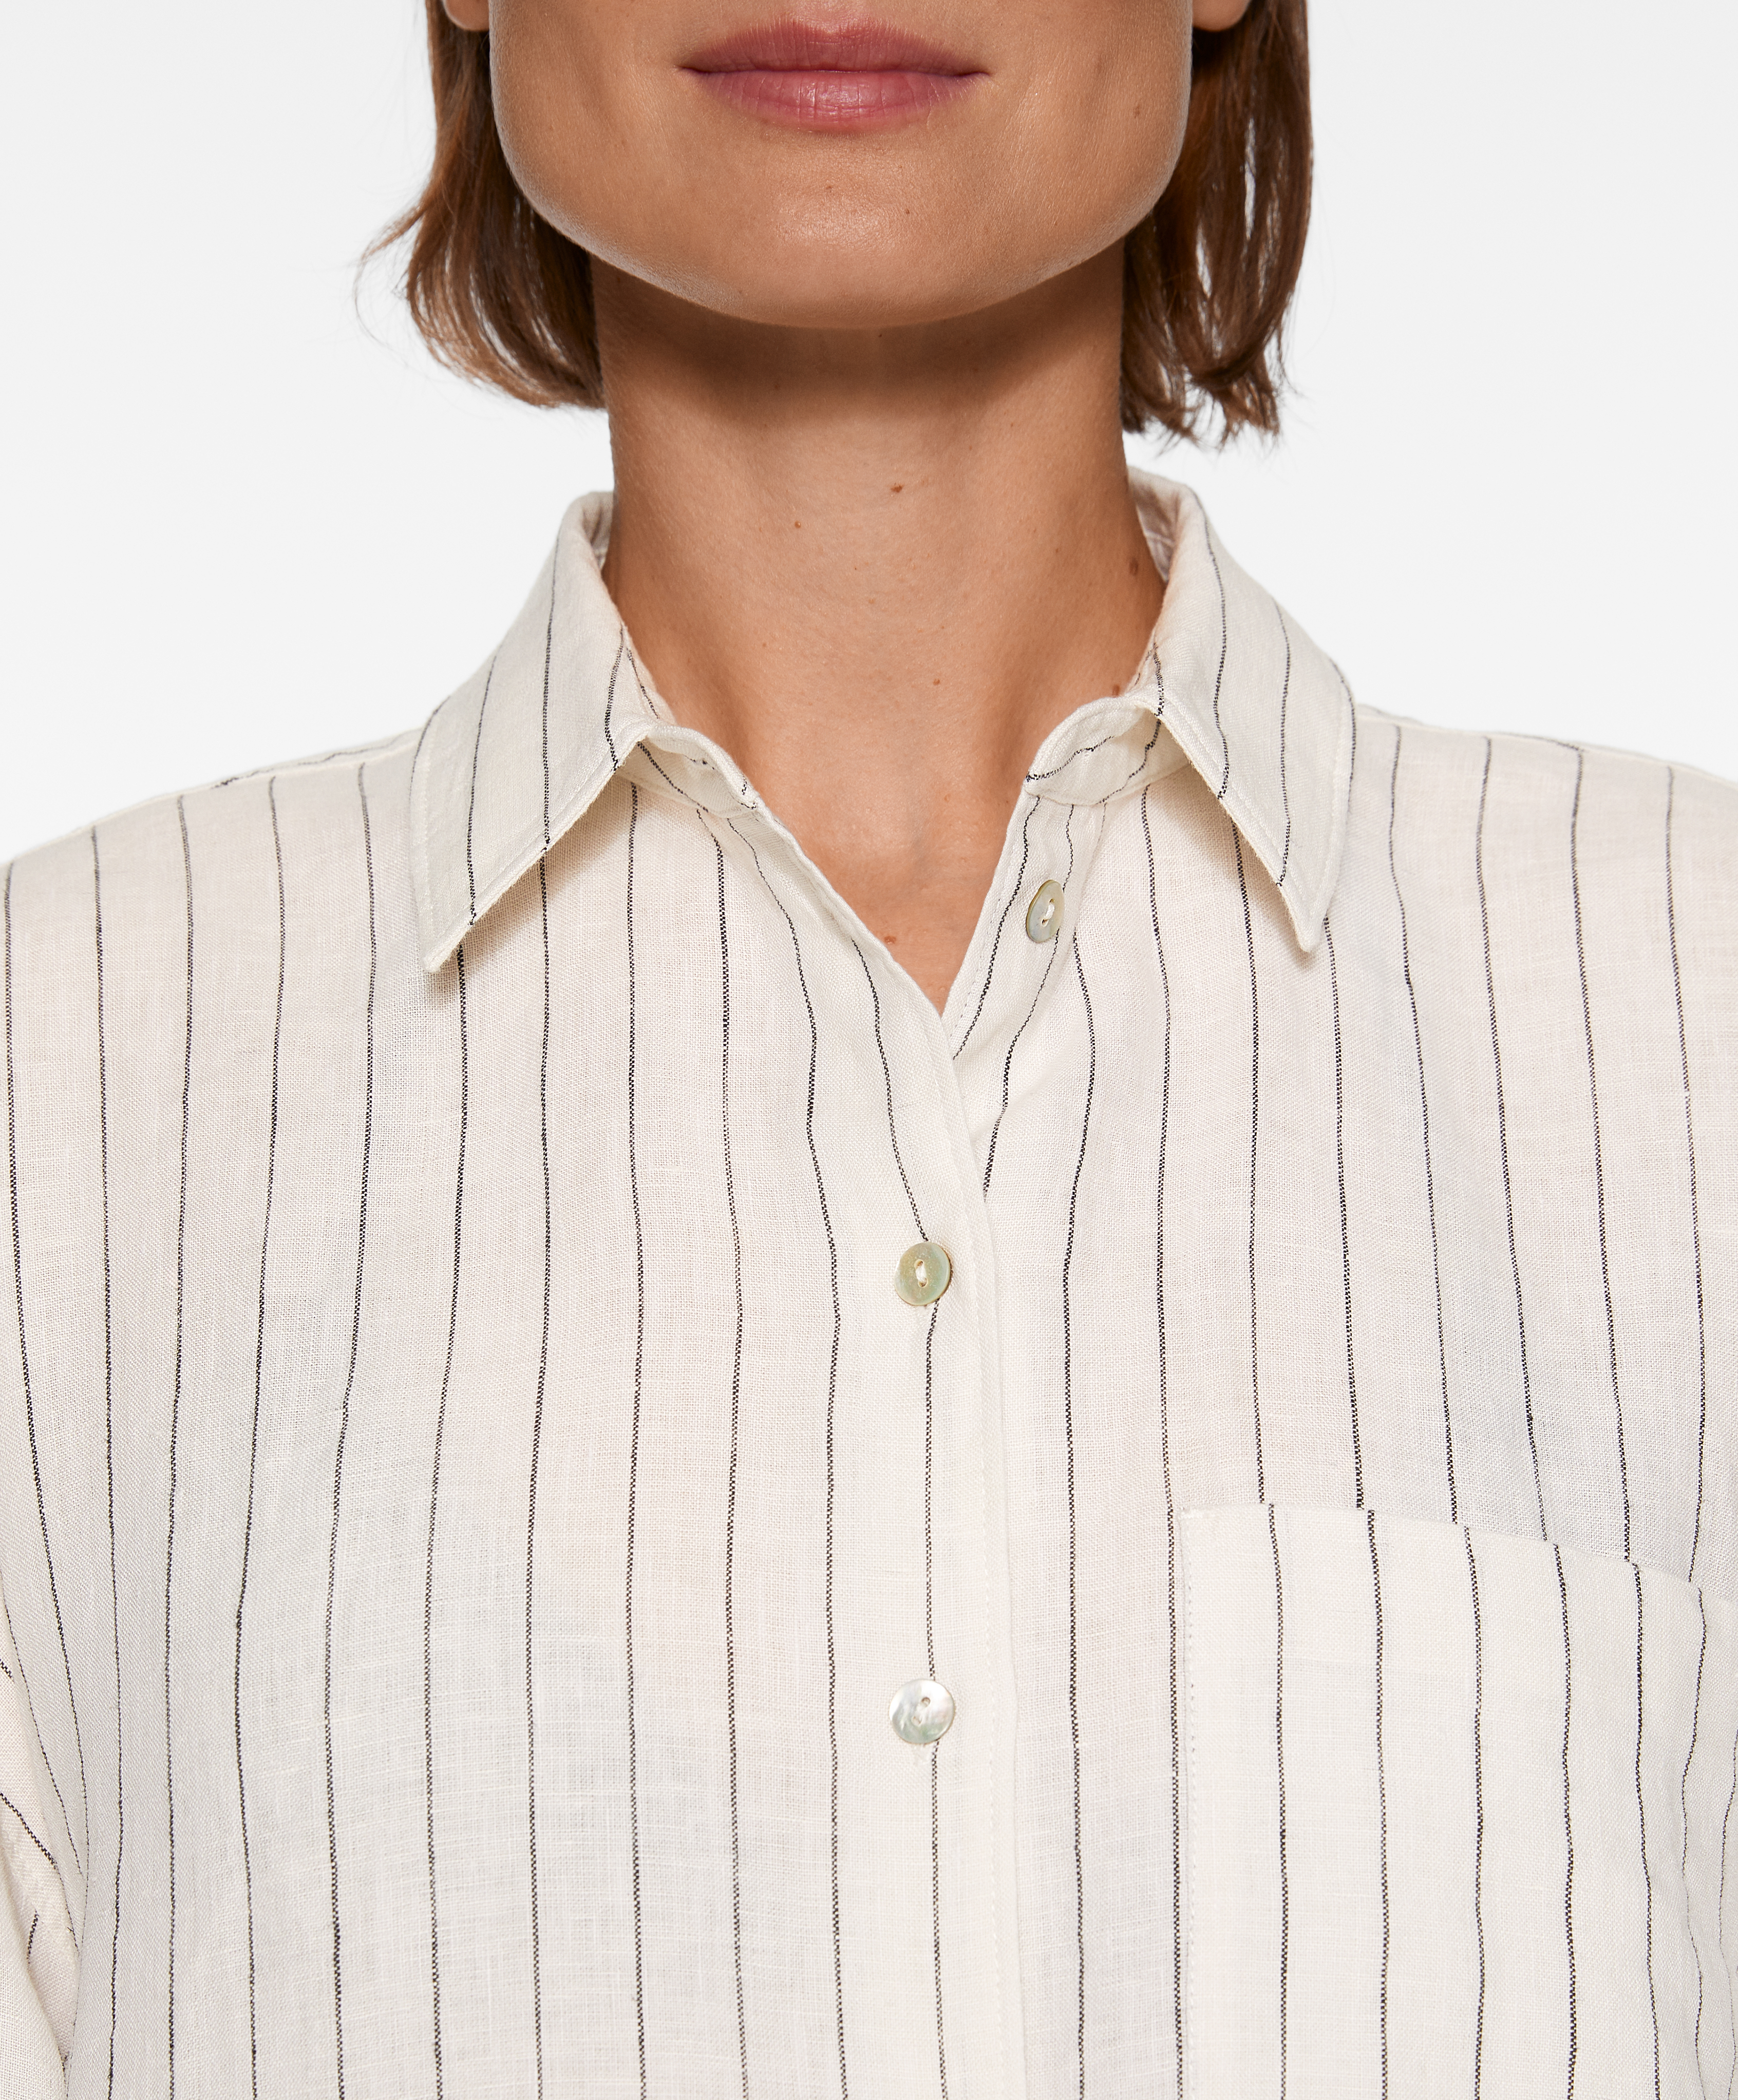 Blusa manga larga rayas 100% lino